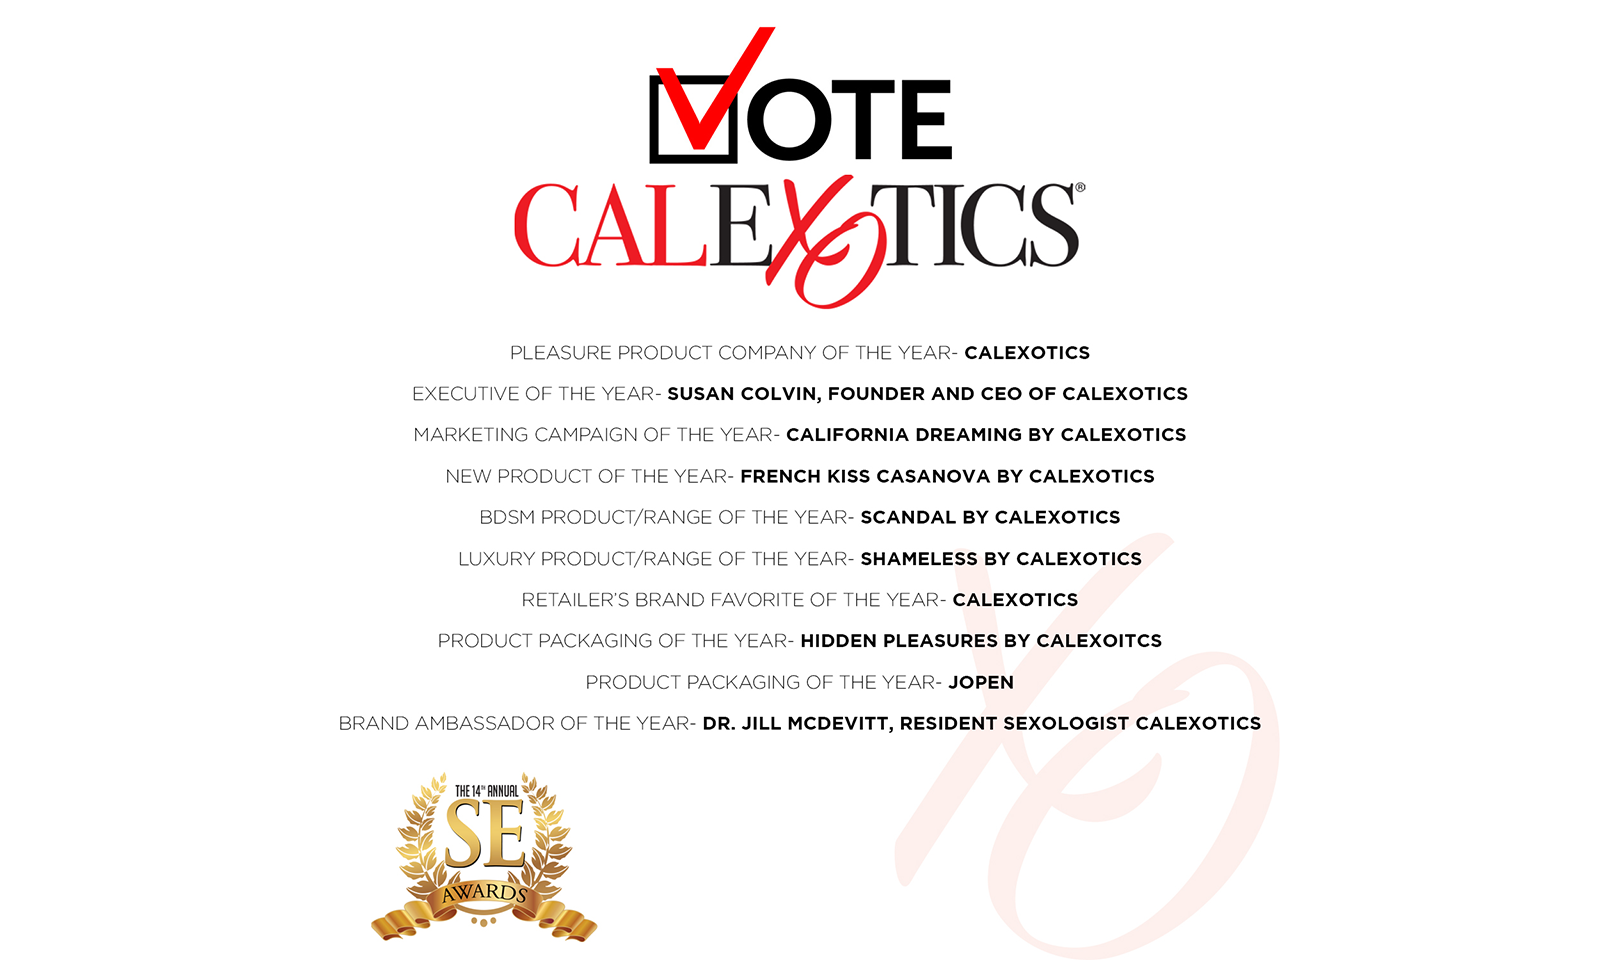 Storerotica Awards Give CalExotics and Jopen 10 Nominations